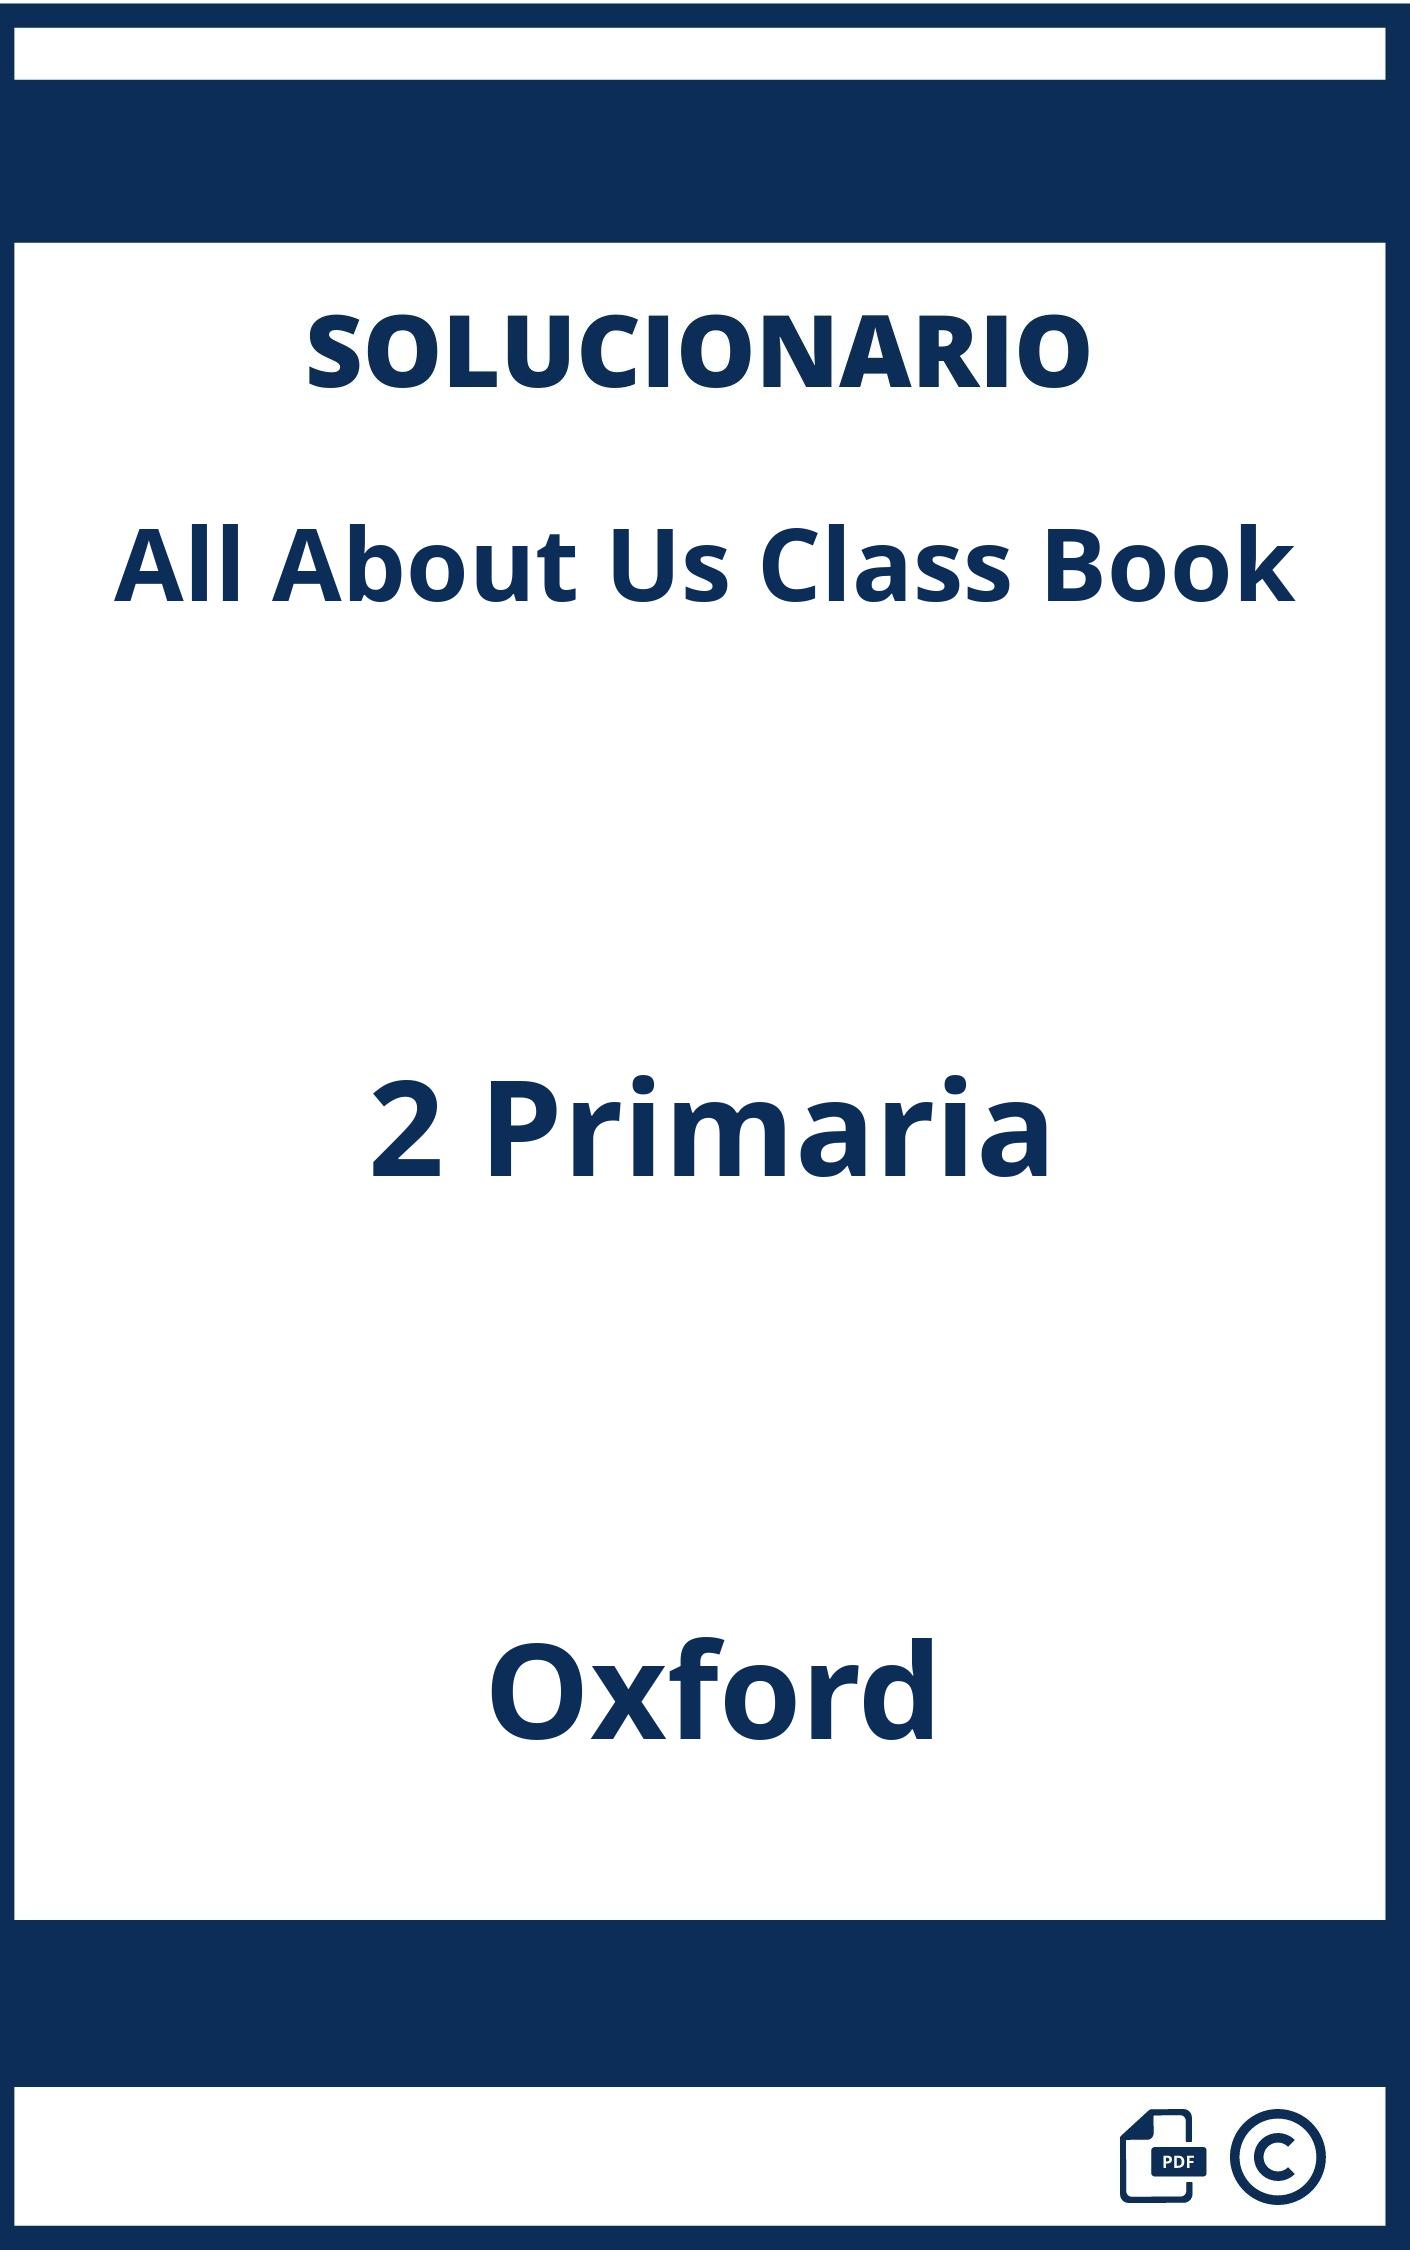 Solucionario All About Us Class Book 2 Primaria Oxford